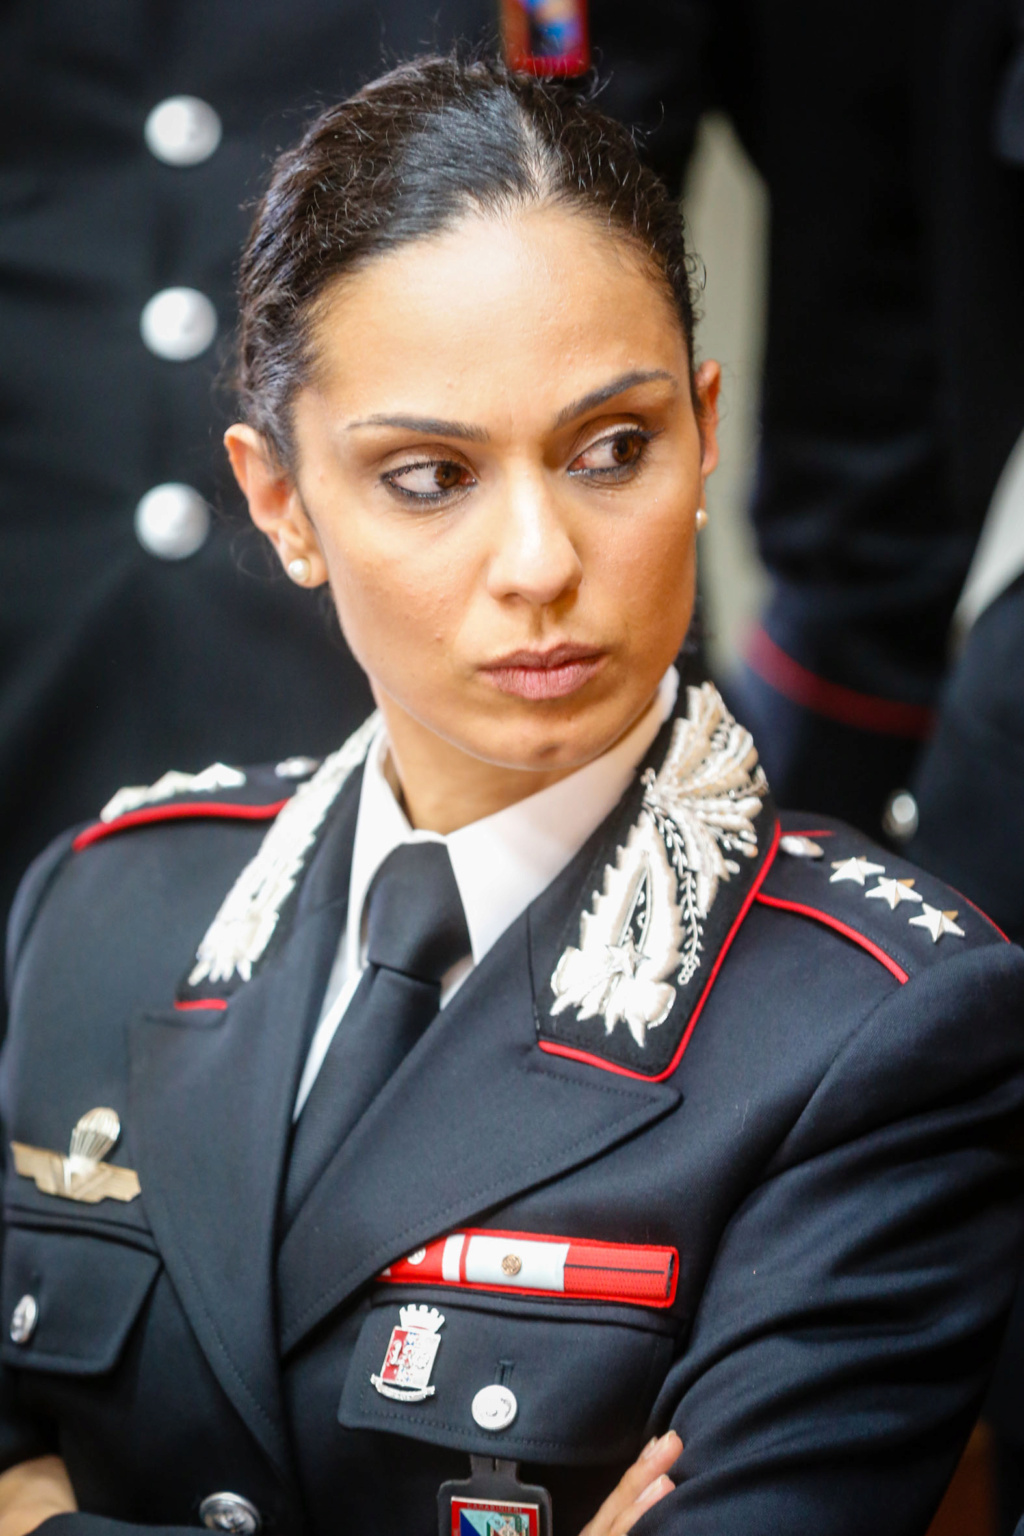 Italian Police Uniform Capita10